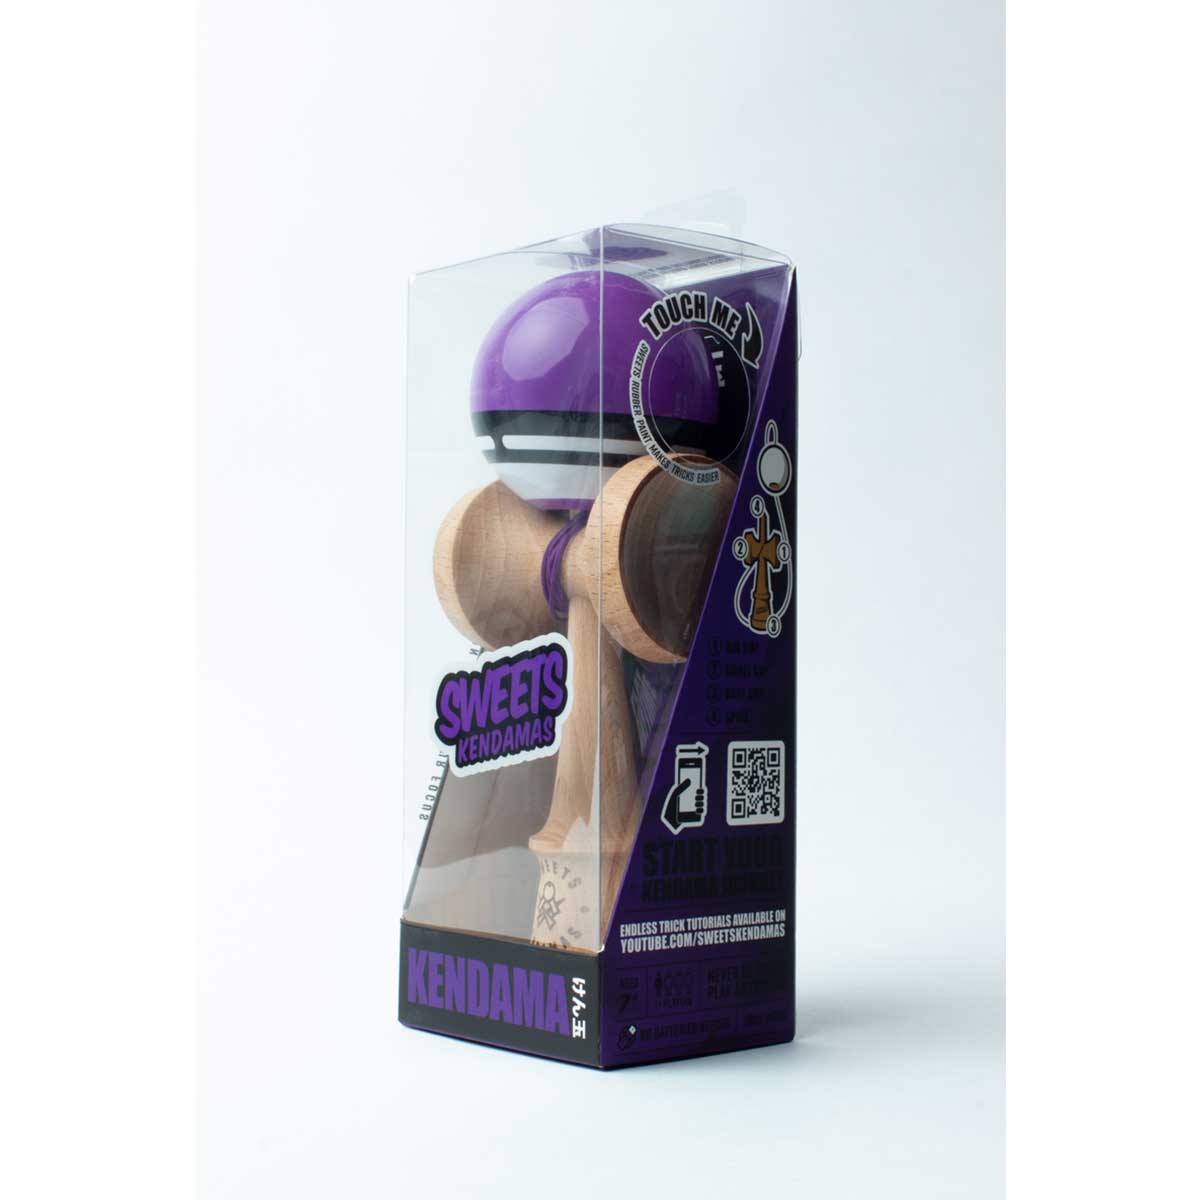 Sweets Kendamas-Sweets Kendamas Boost Radar 2021-059-BOP-Purple-Legacy Toys